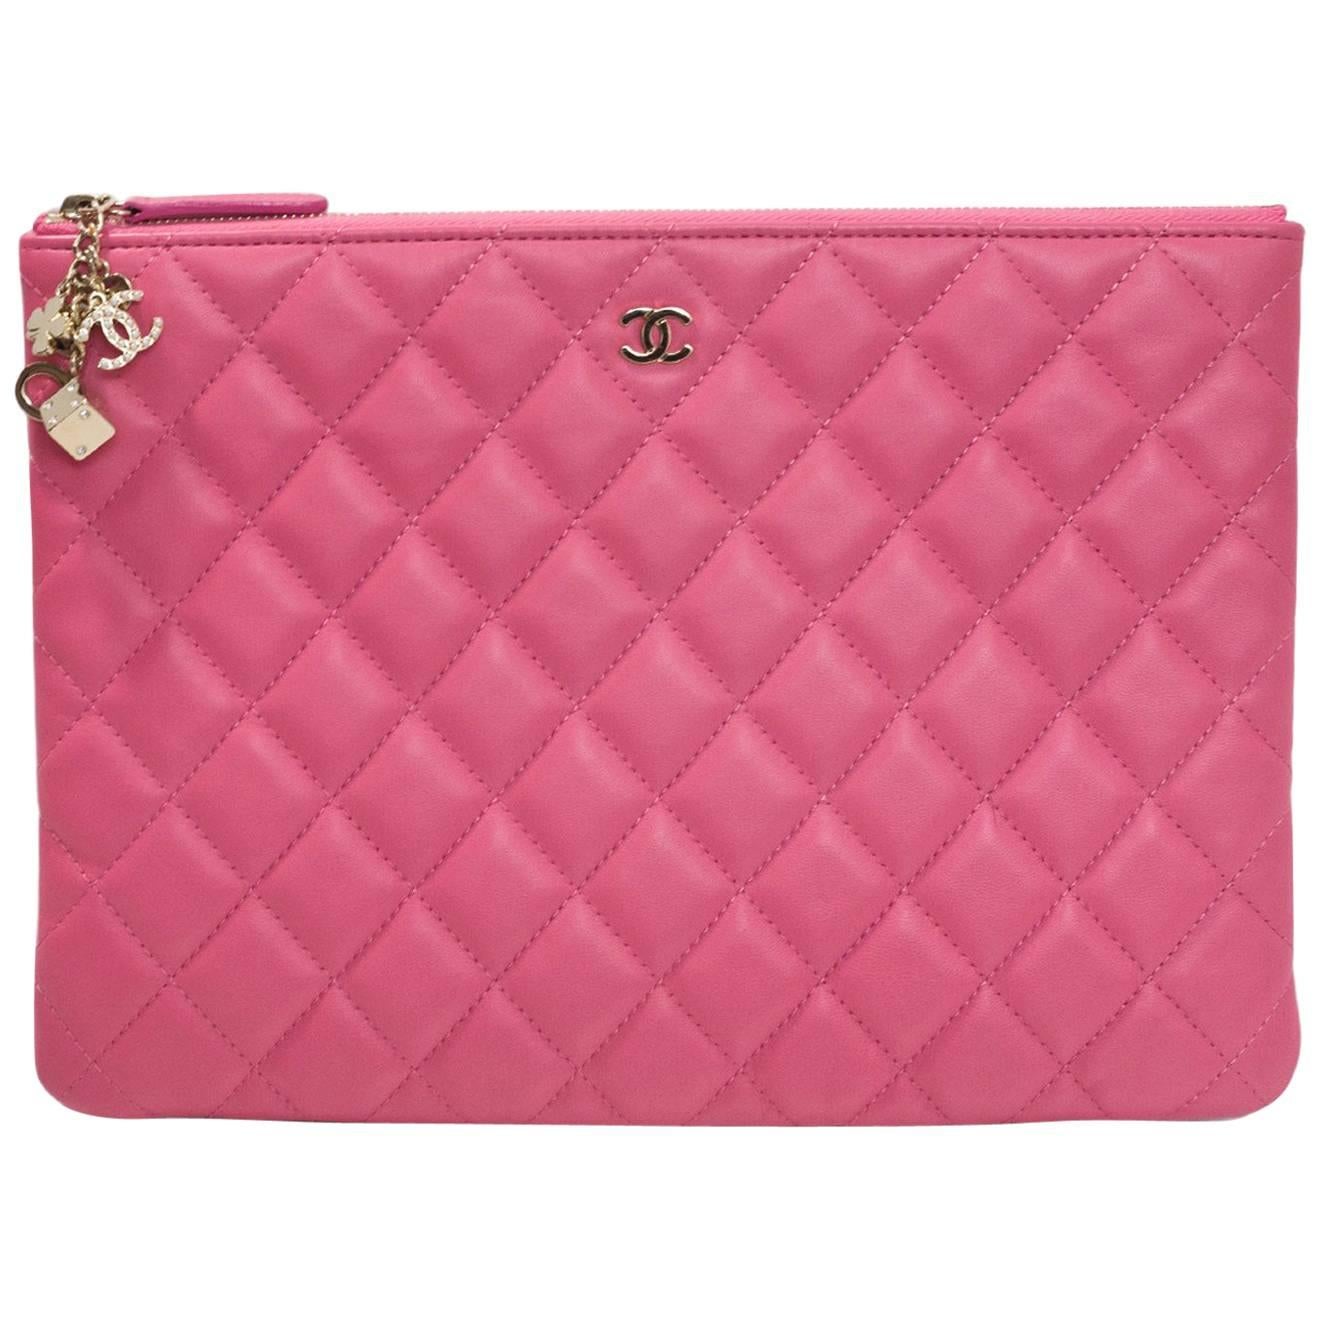 Chanel Pink Lambskin Medium Casino O-Case Clutch Bag with Box